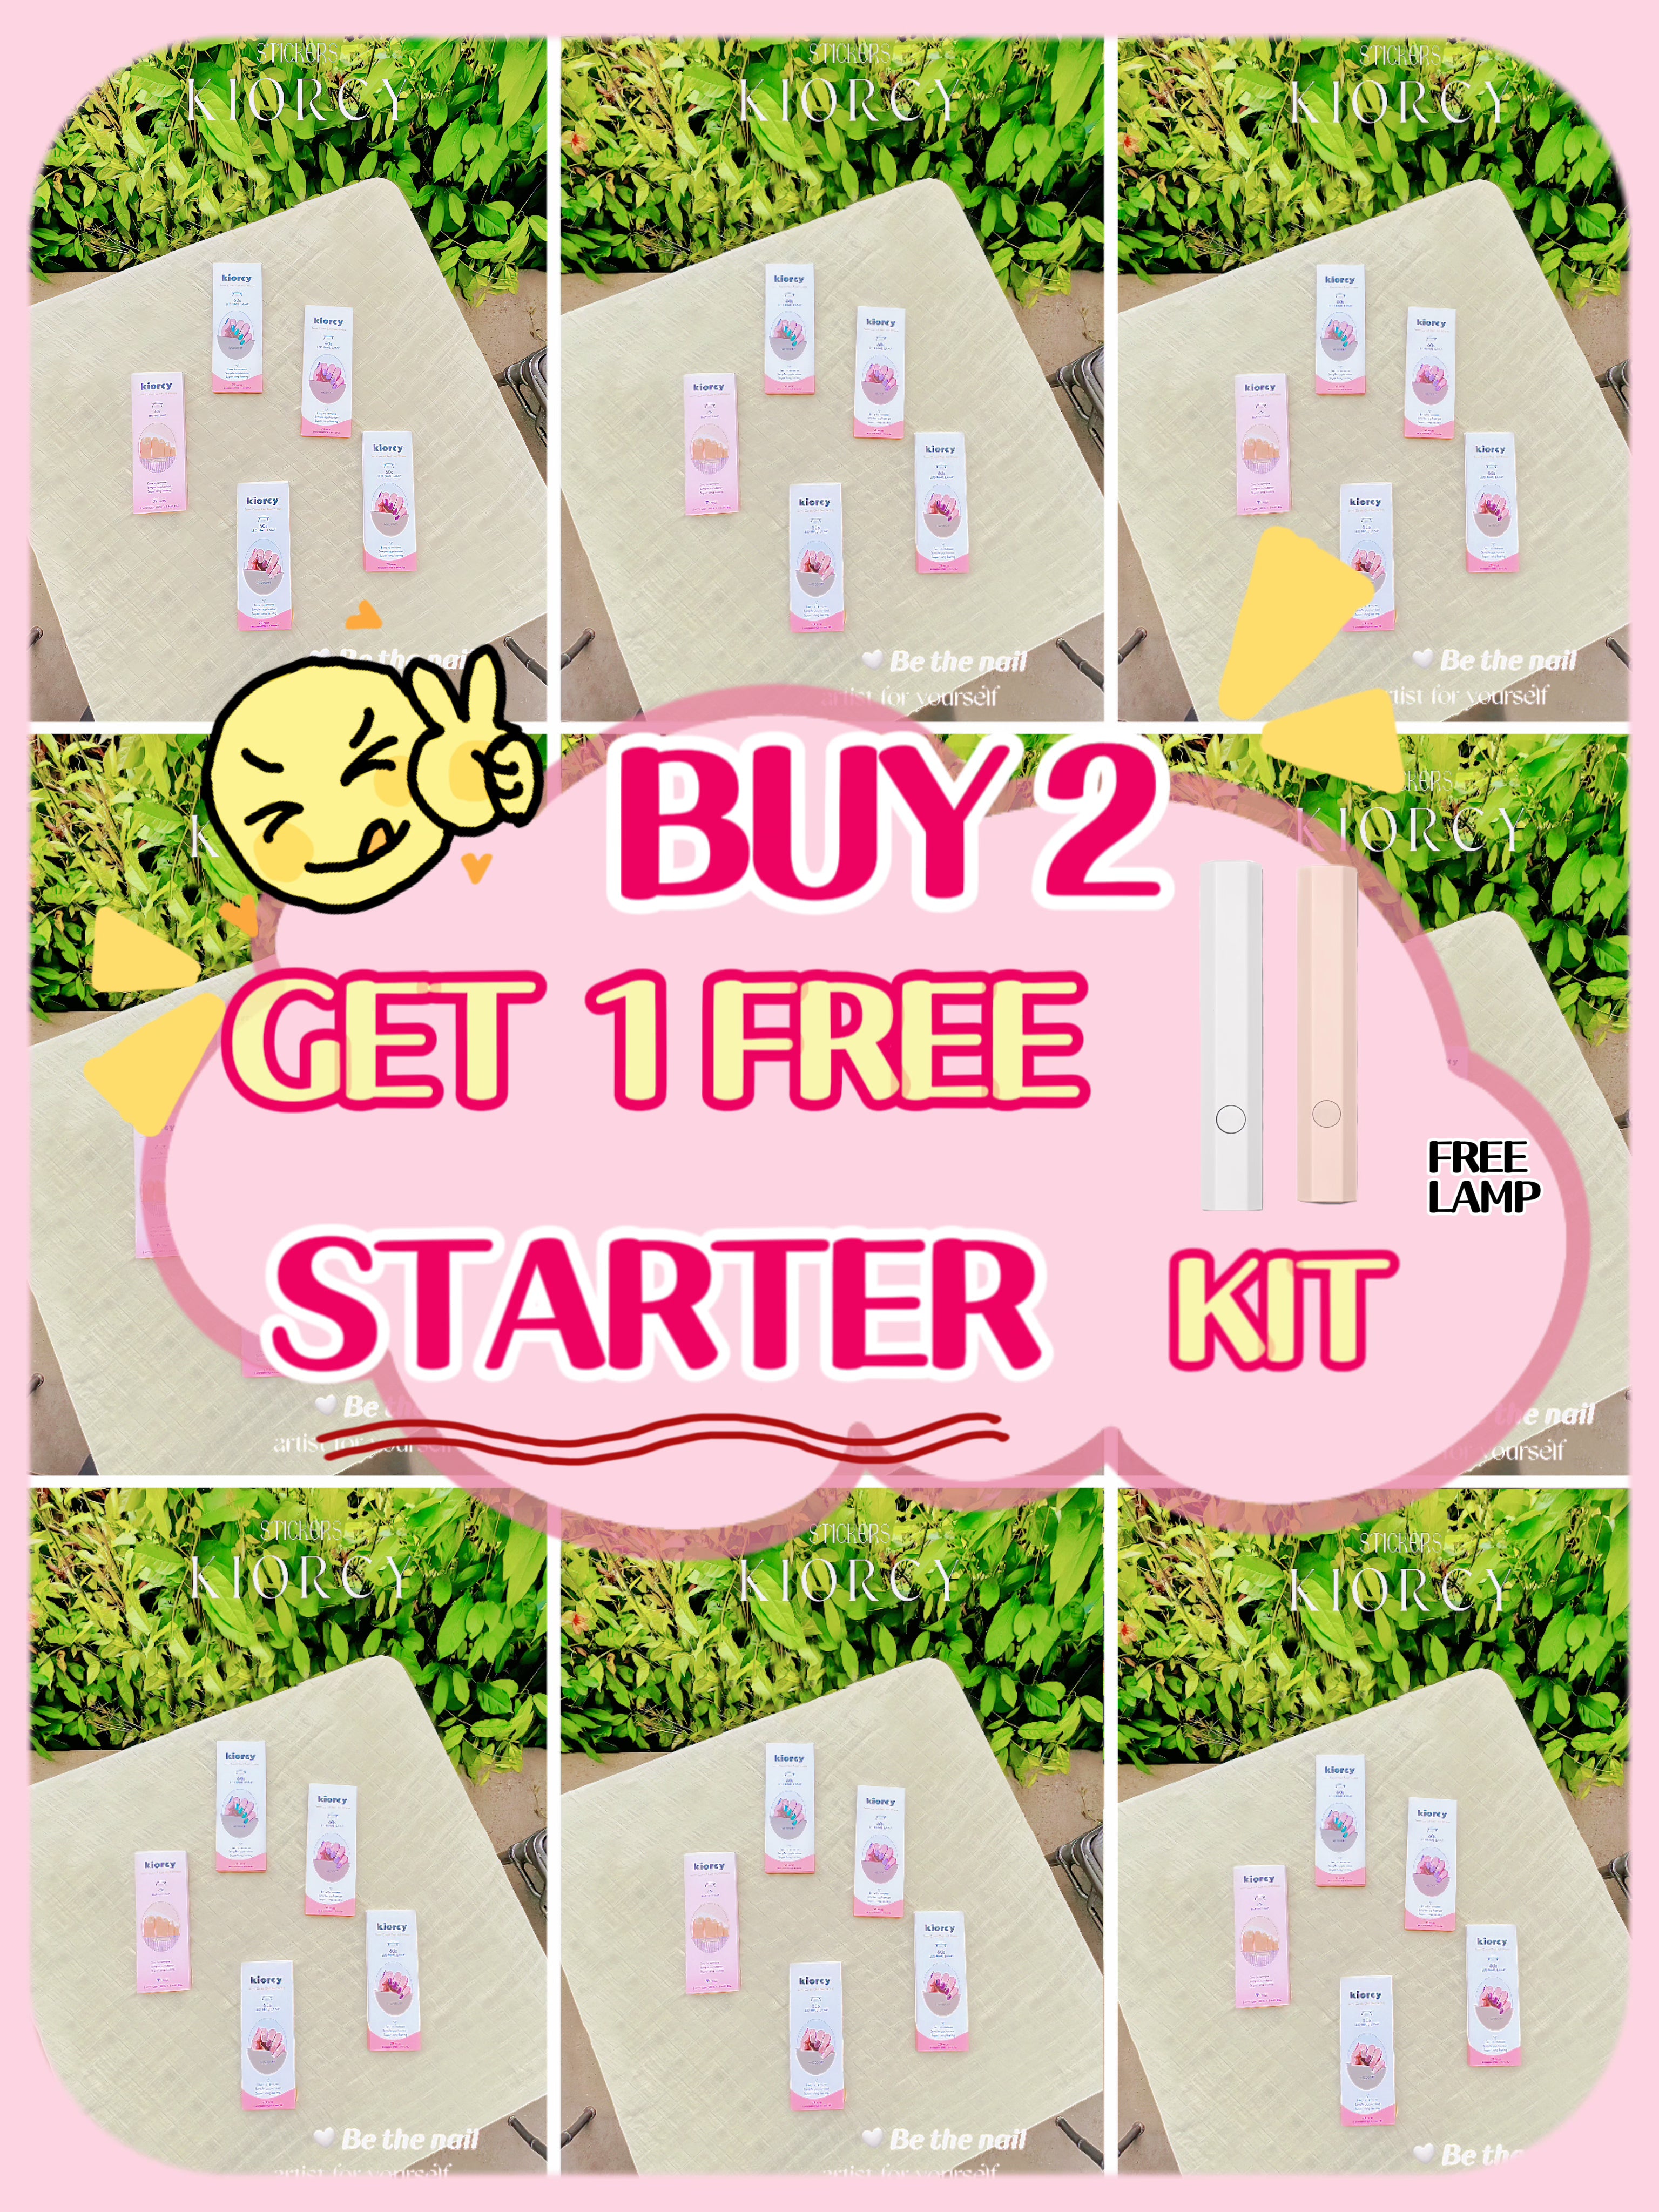 Gel Nail Sticker Starter Kit (FREE UV Lamp With 2 Gel Nail Stickers)